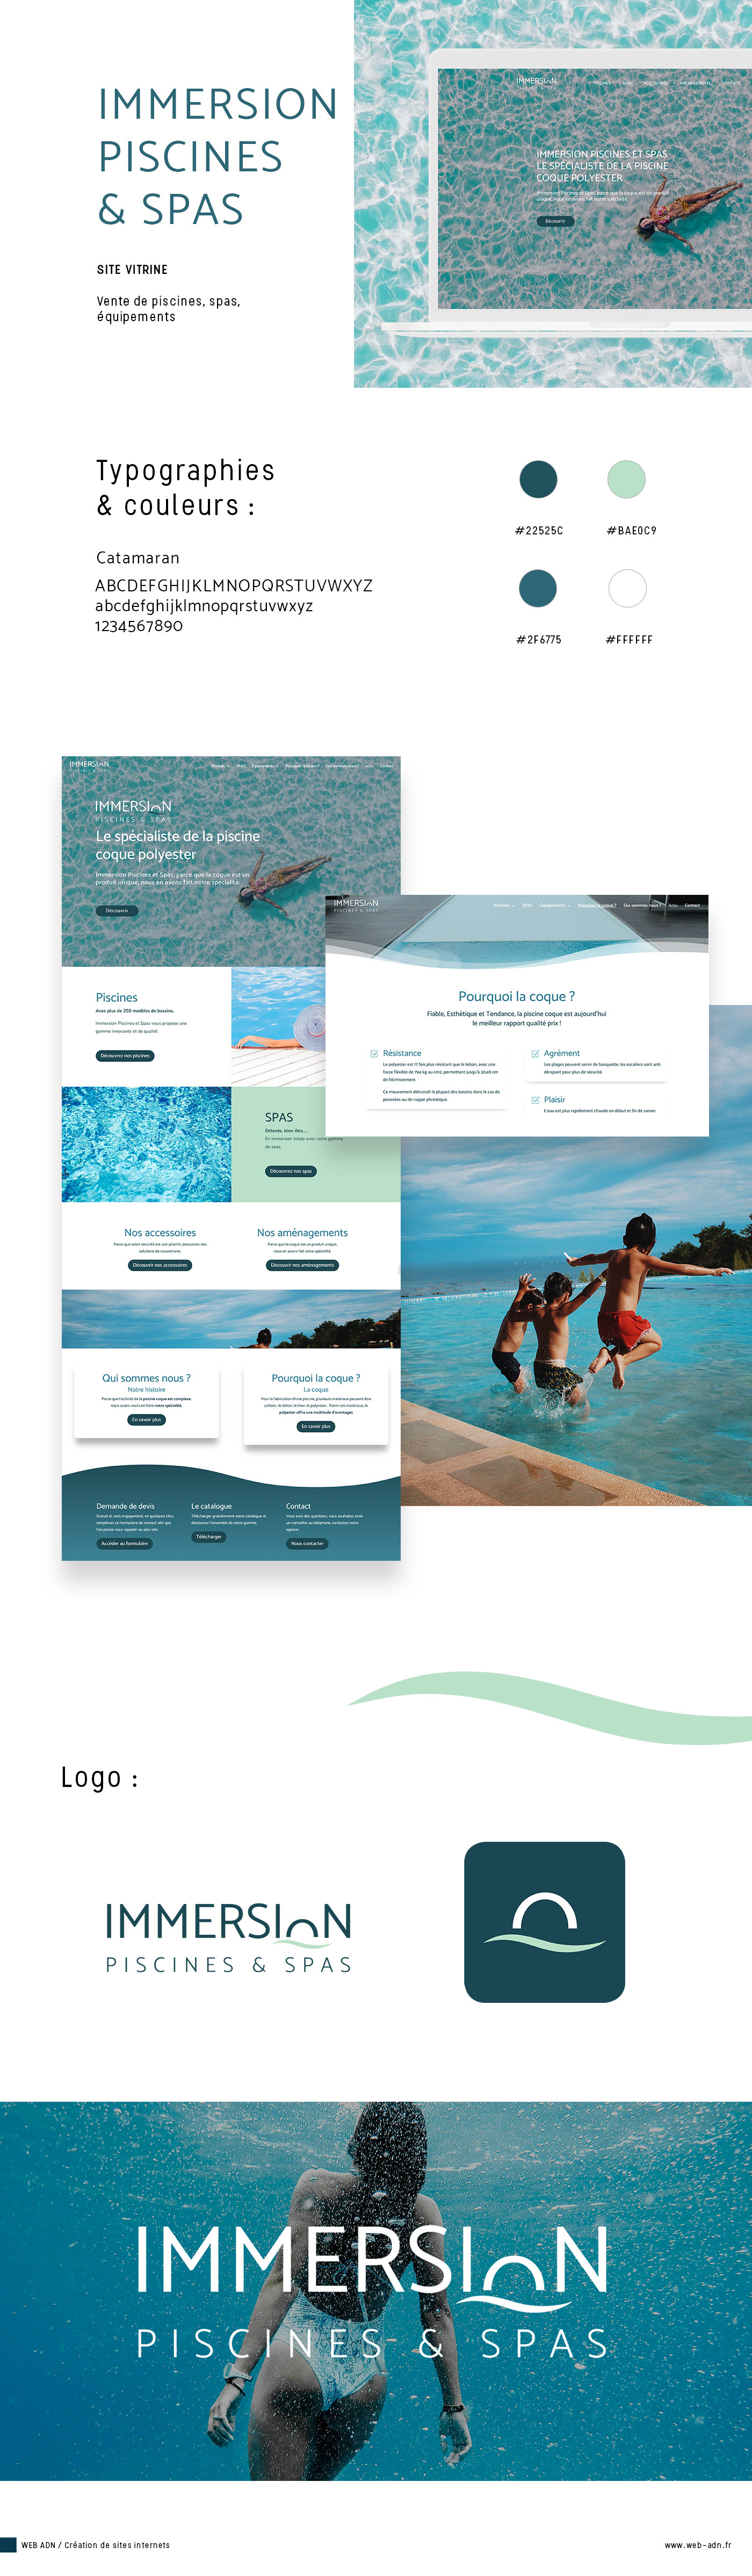 Website Webdesign Piscines spas water swimming pool